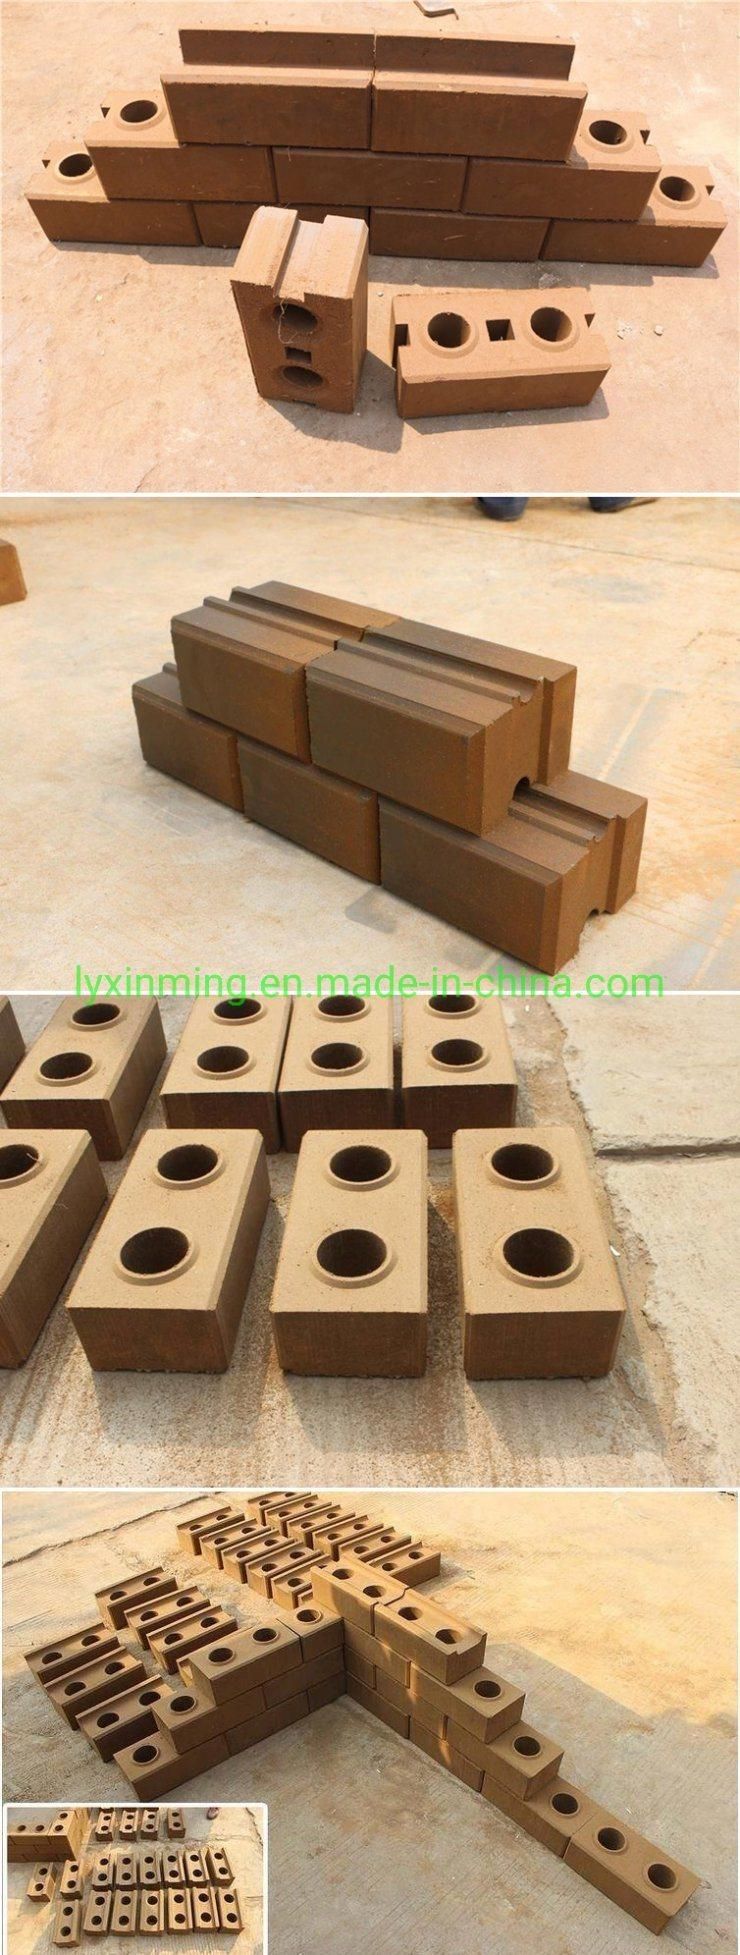 Manual Xm2-40 Fly Ash Brick Making Machine Clay Brick Machine in India